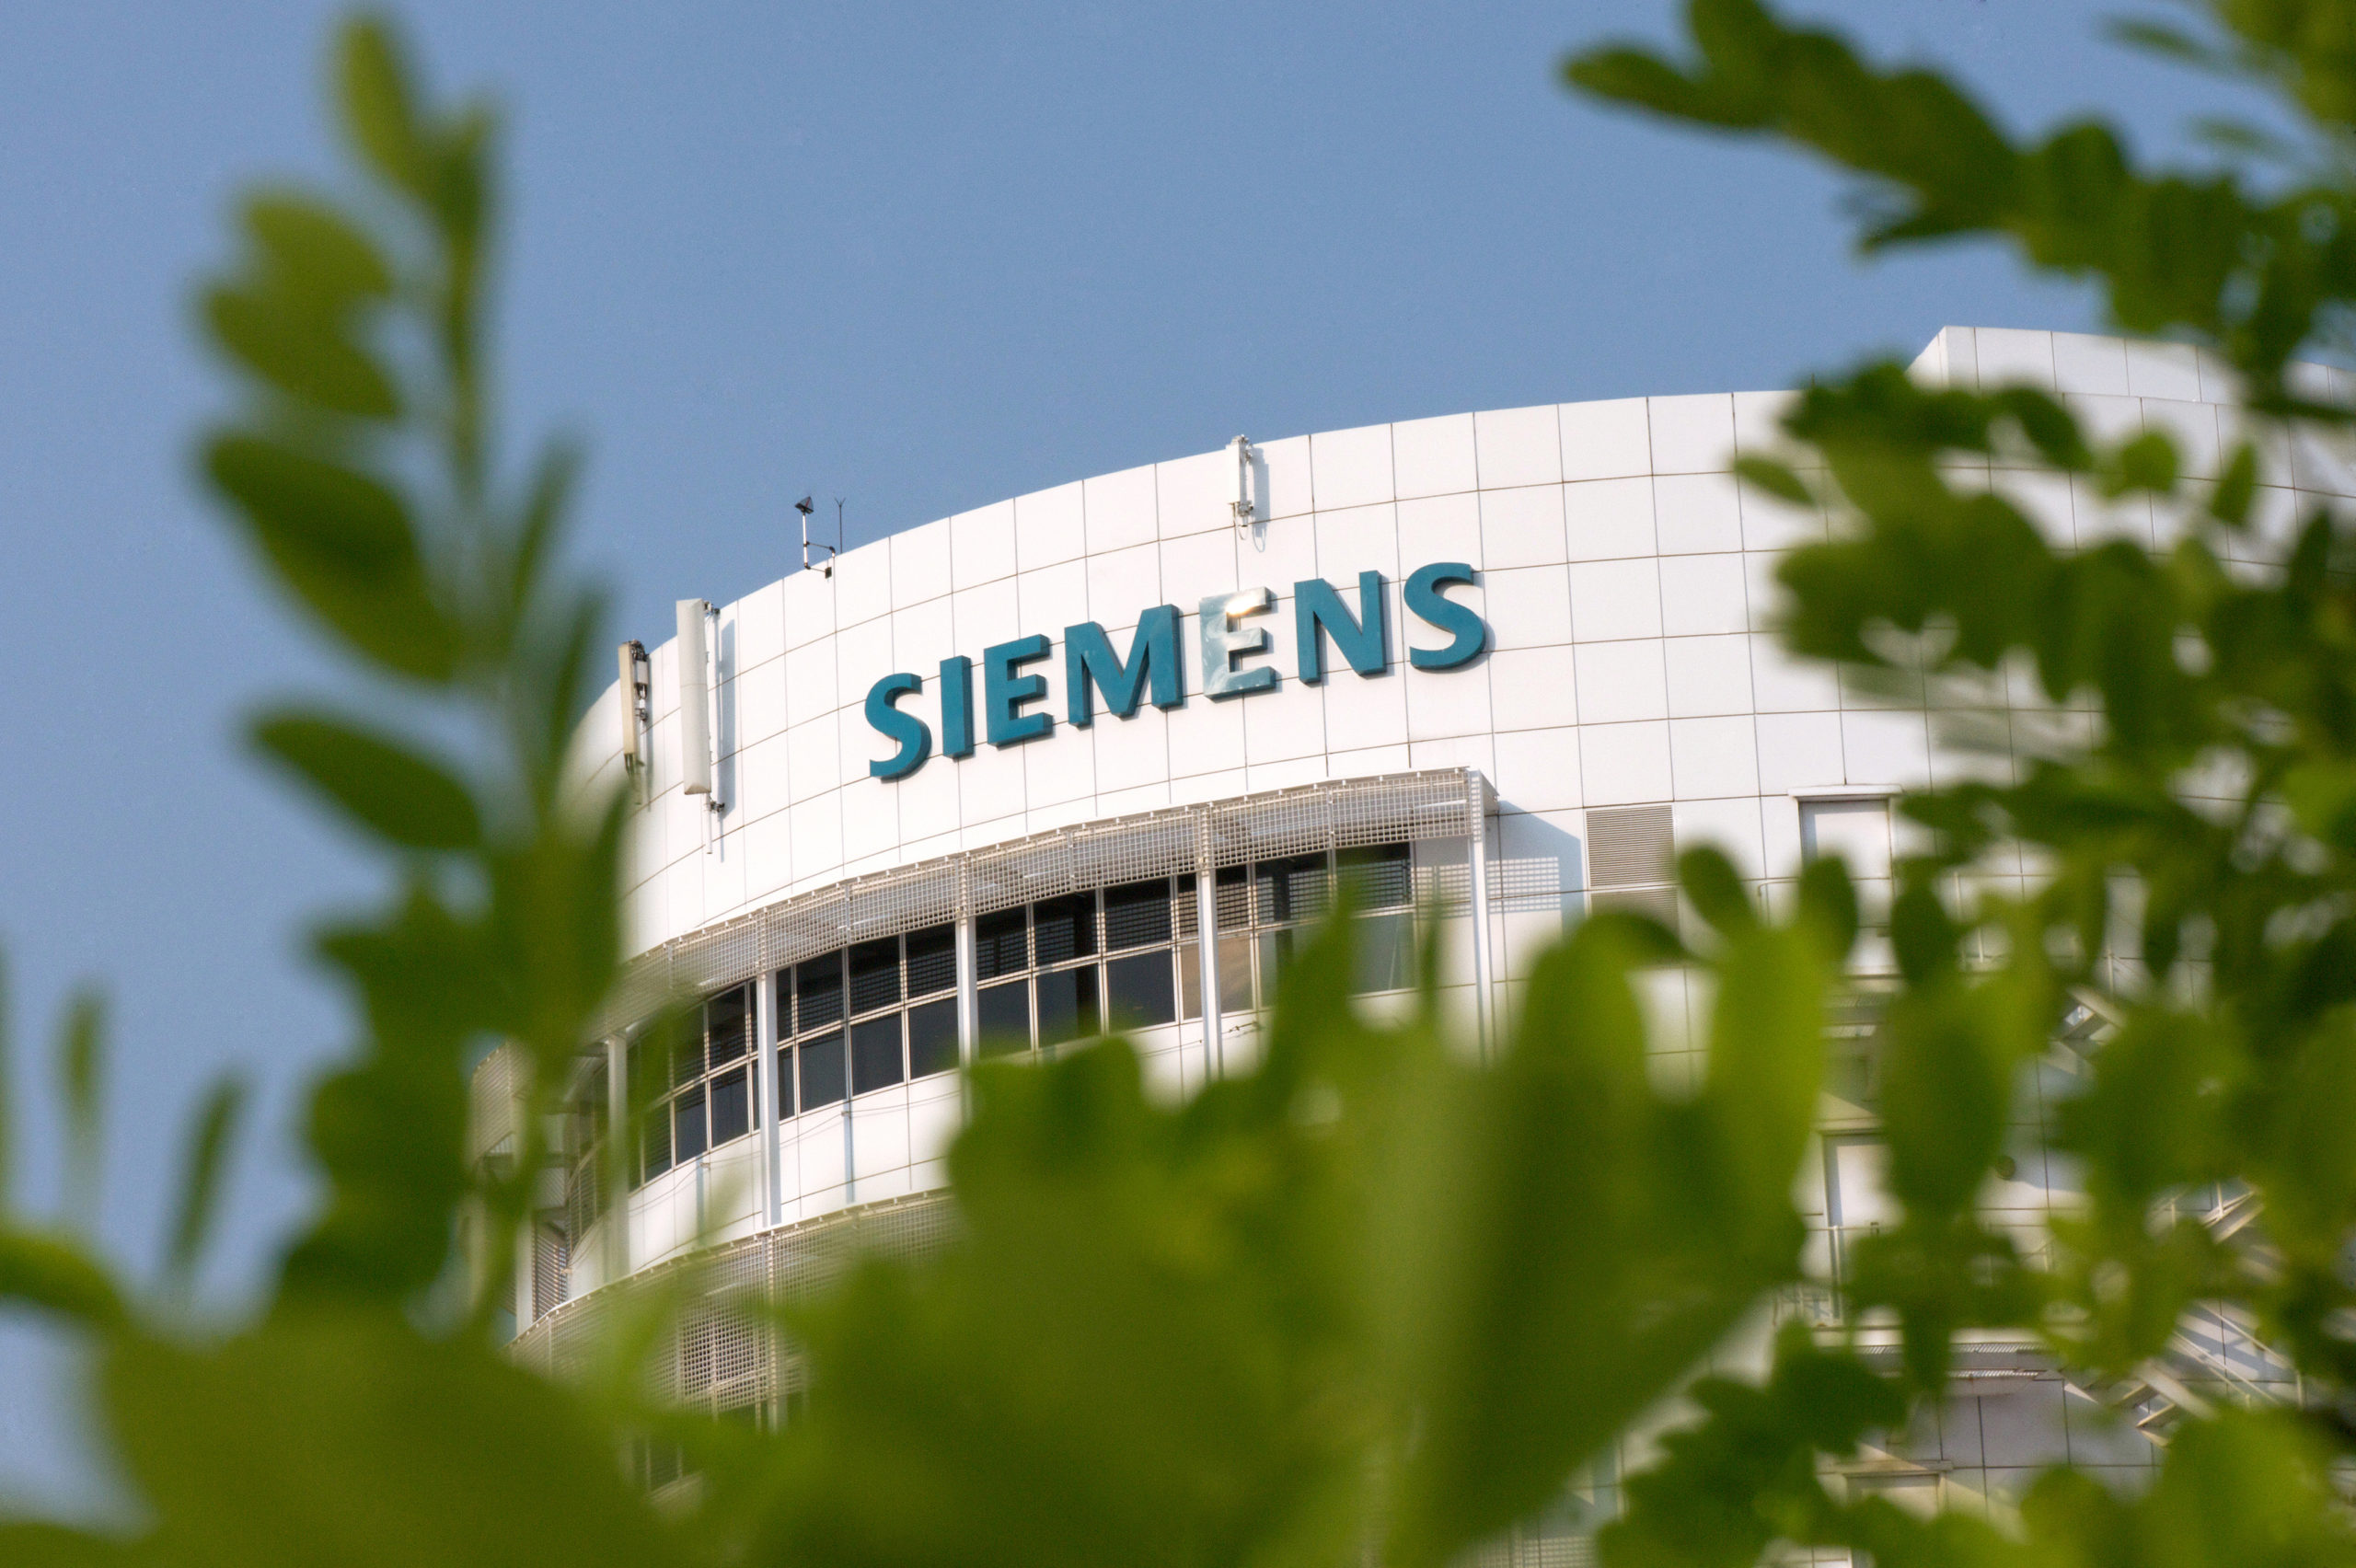 Siemens Verkauft Getriebe Tochter Fur Zwei Milliarden Euro An Investor Nurnberger Blatt